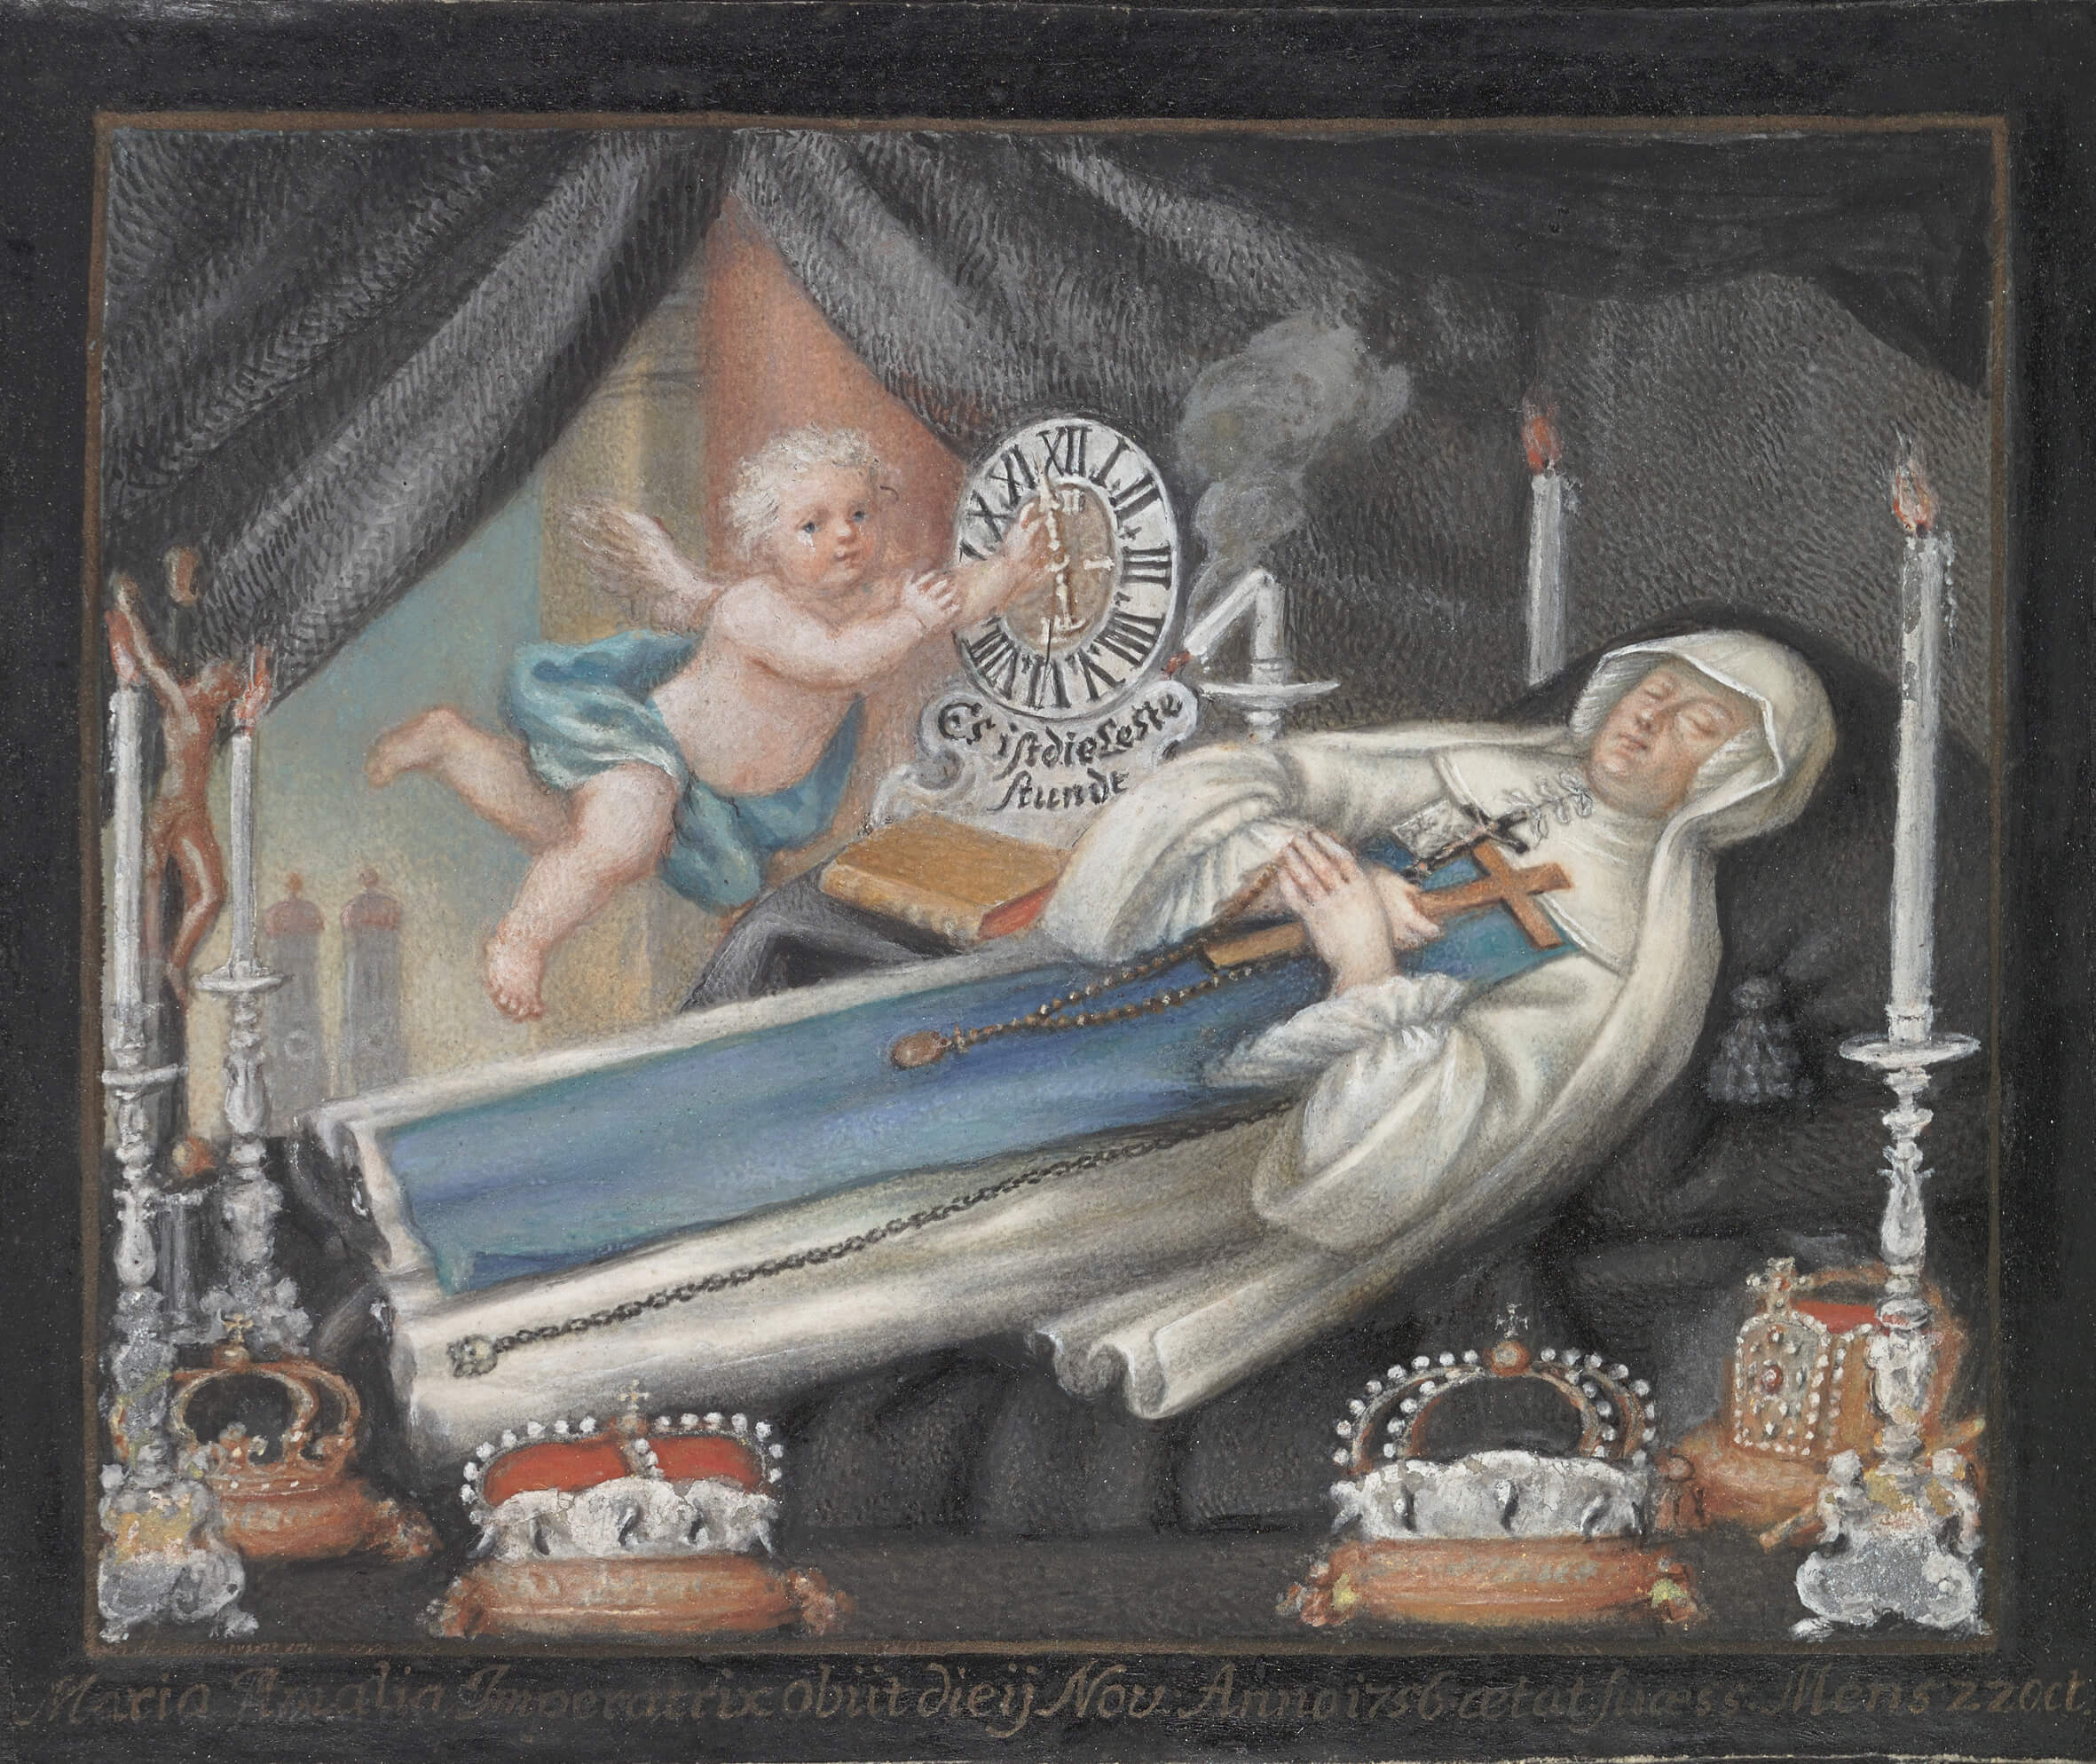 Maria Amalia auf dem Totenbett